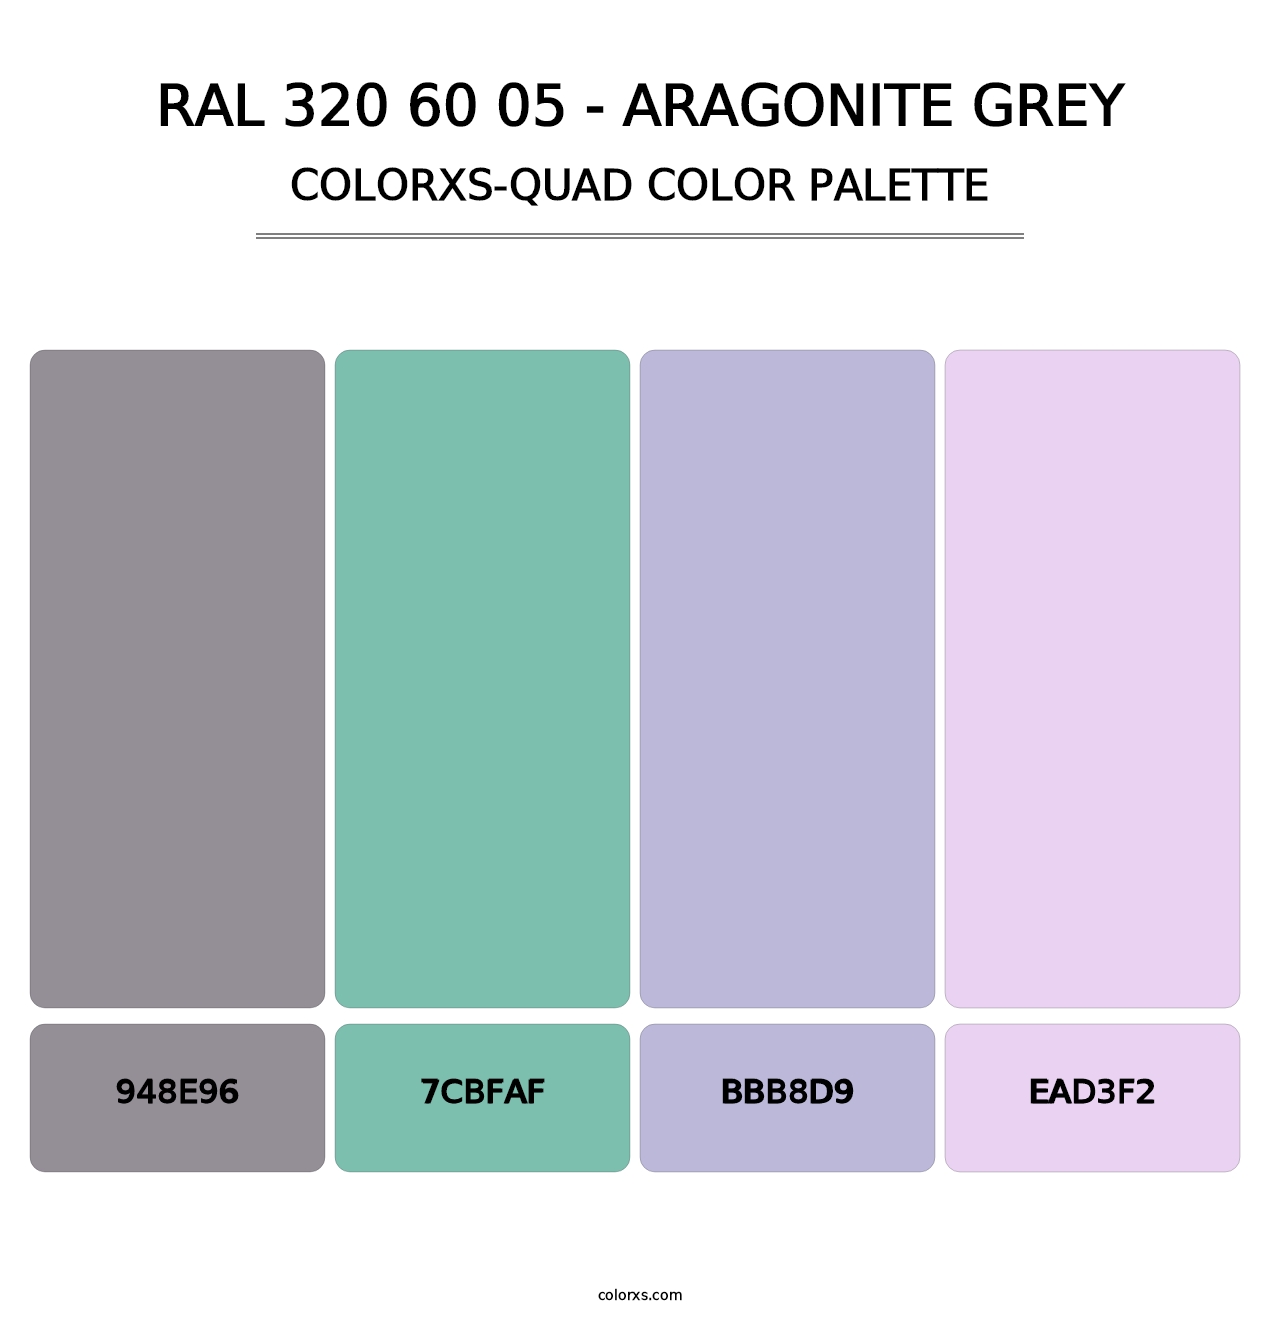 RAL 320 60 05 - Aragonite Grey - Colorxs Quad Palette